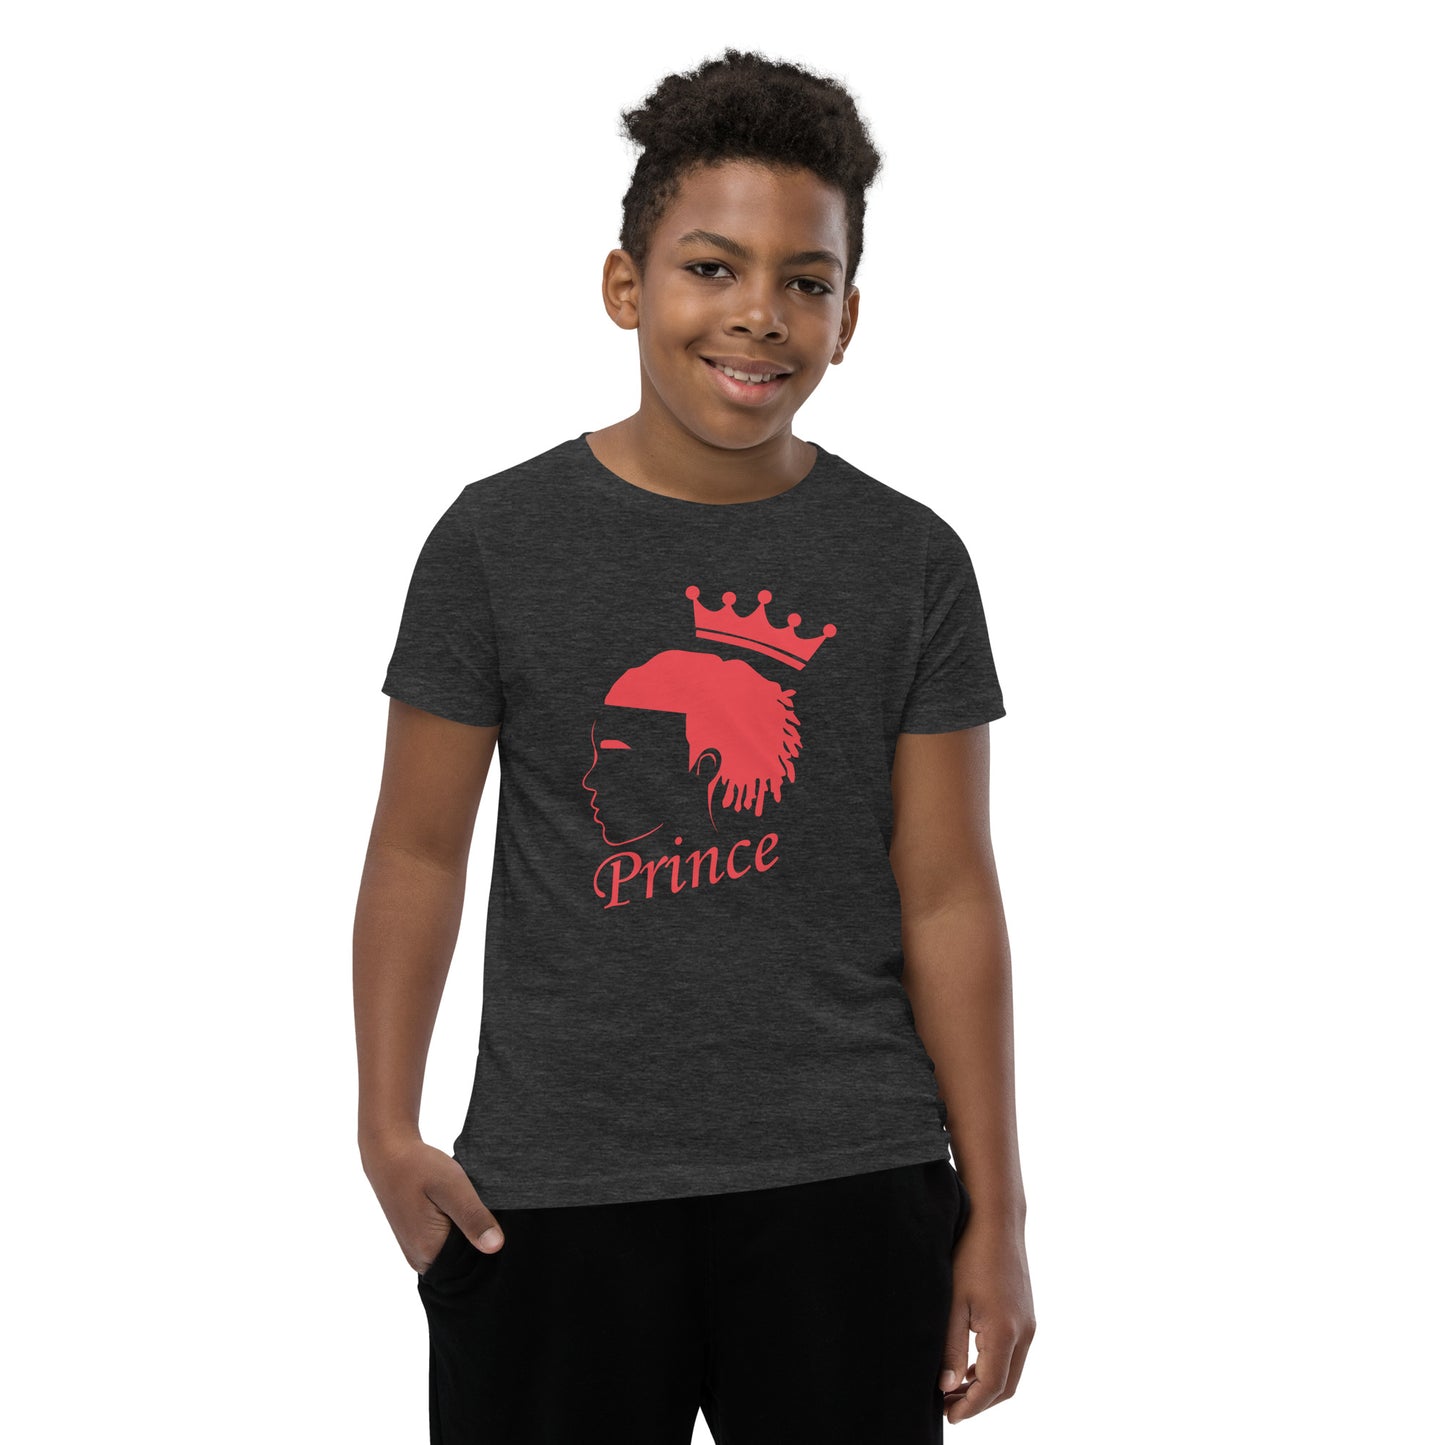 The Prince T-Shirt